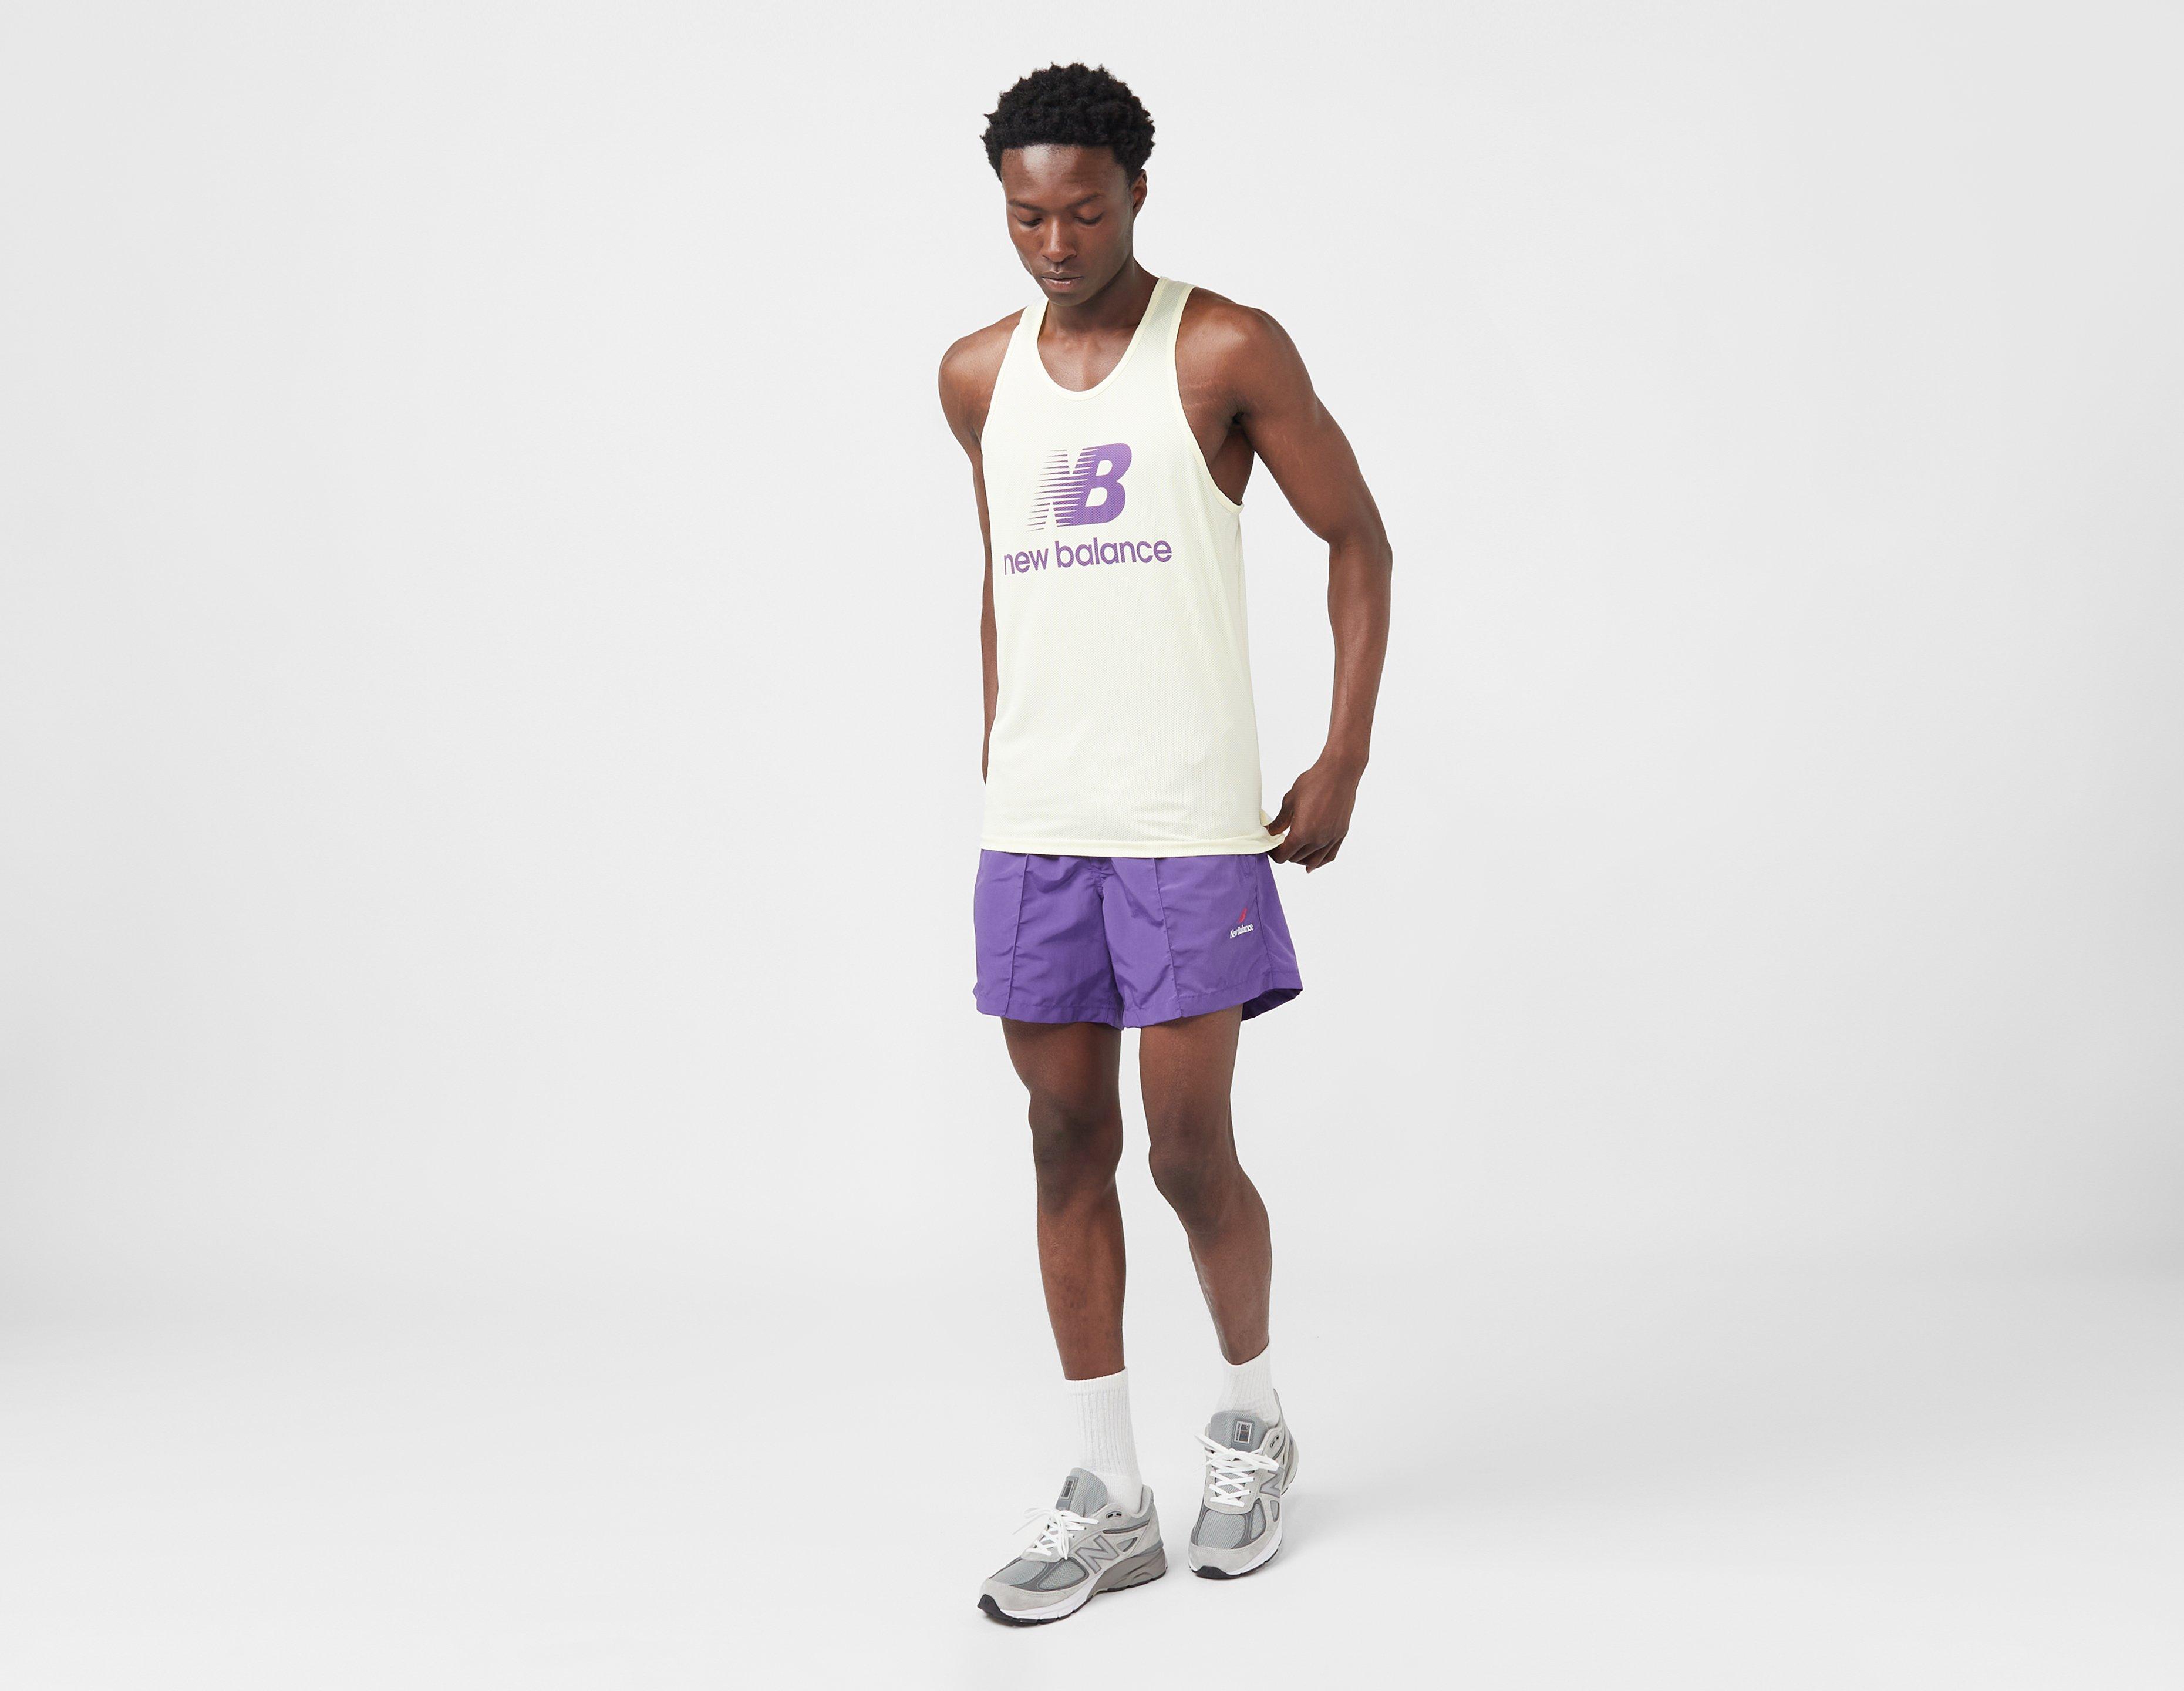 Los Angeles Lakers Vintage Nike Reversible Basketball Shorts